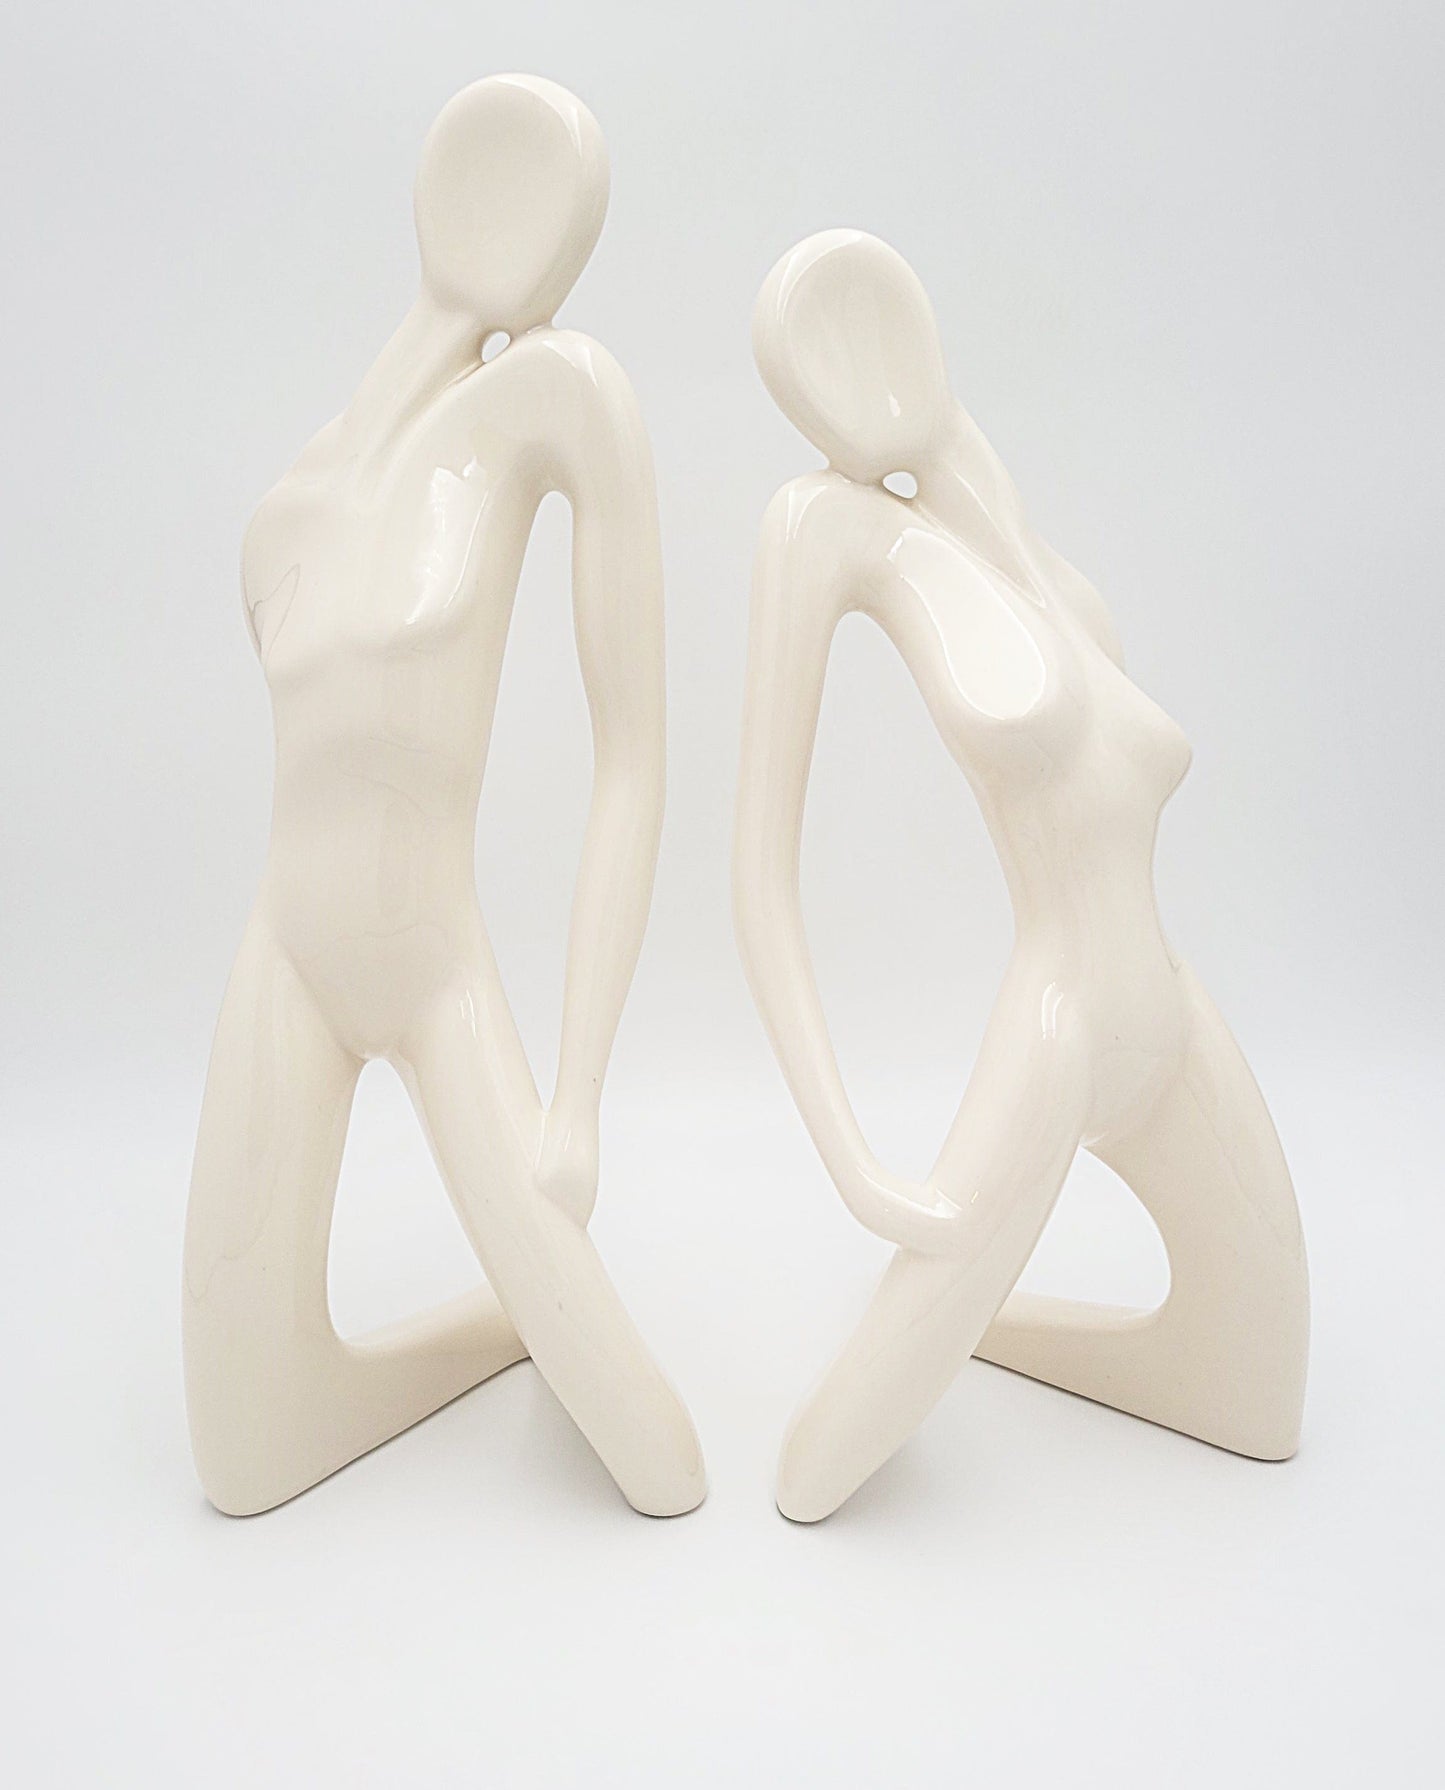 Jaru Sculpture MCM Jaru California Ceramic Abstract Modernist Human Figure TALL Sculpture 1980s